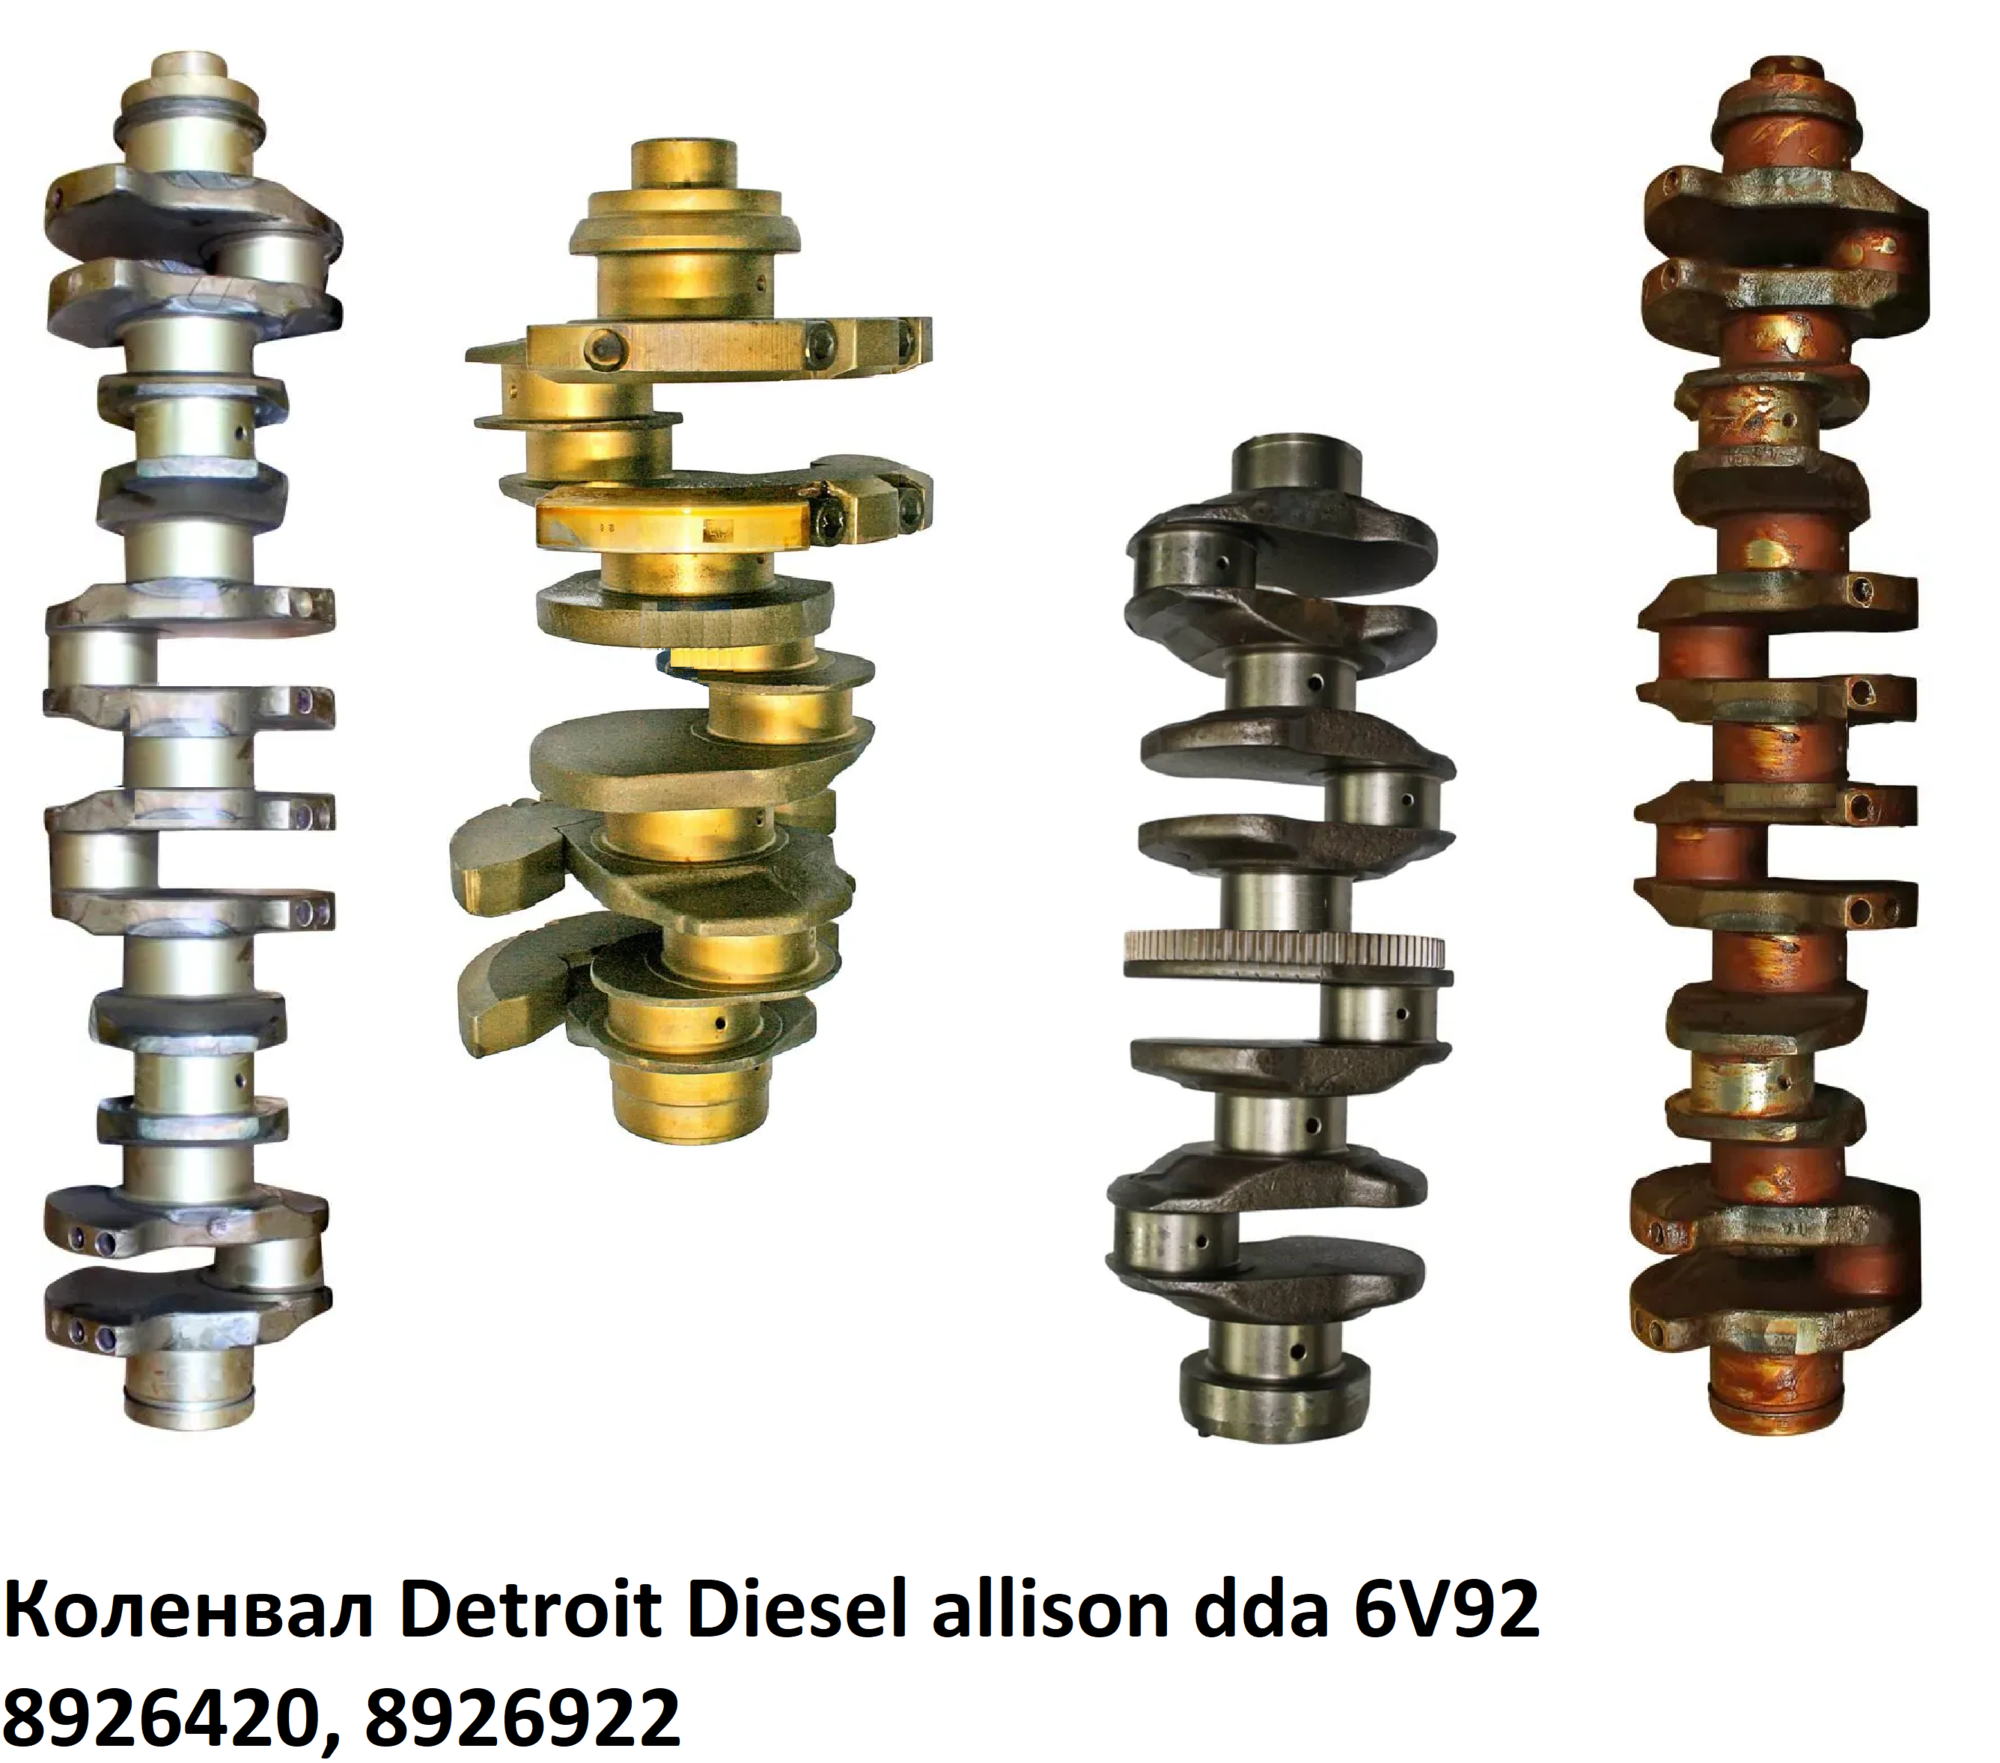 Коленвал Detroit Diesel allison dda 6V92, 8926420, 8926922